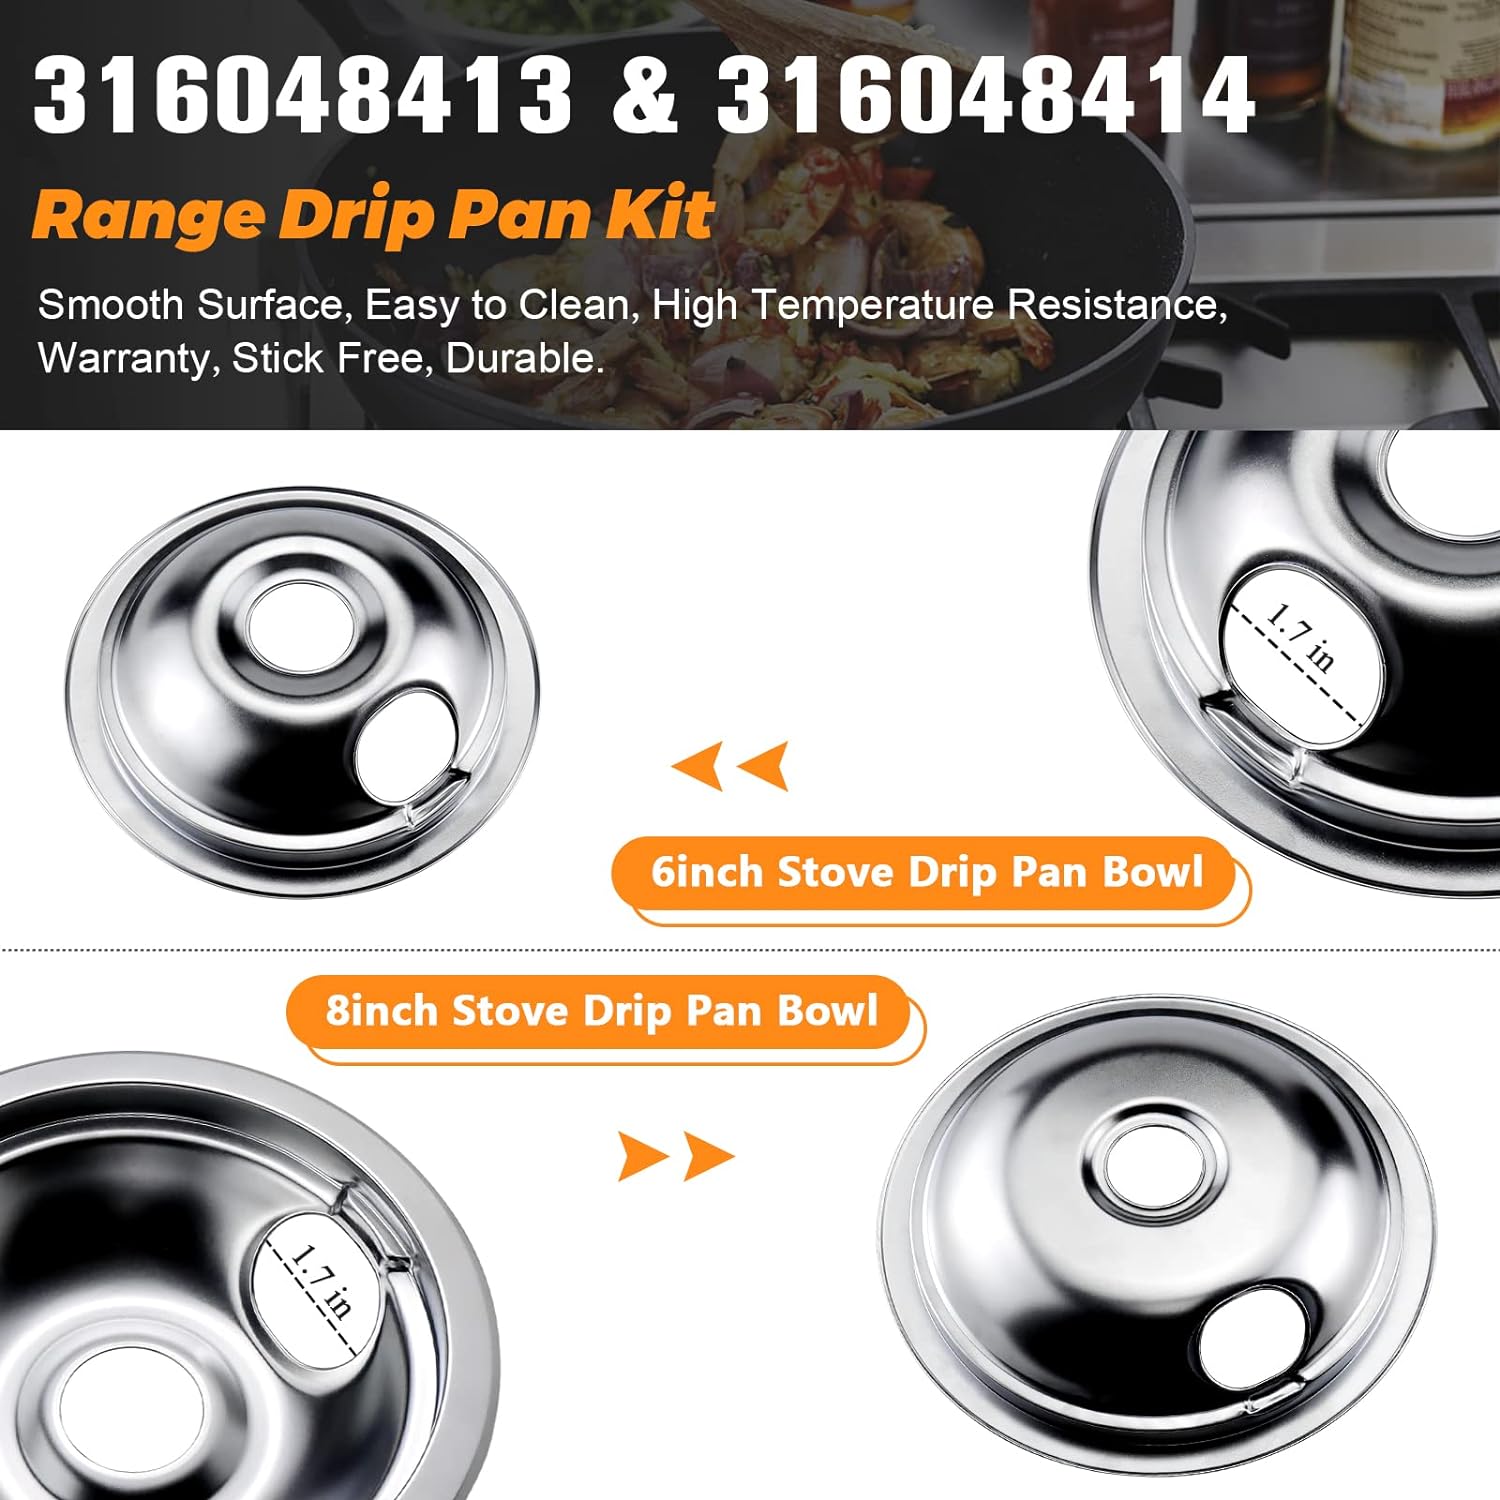 Blutoget 316048413 316048414 Range Drip Pan Kit - Compatible with Frigi-daire Ken-more Electric Range Burner -Includes 2 6-Inch and 2 8-